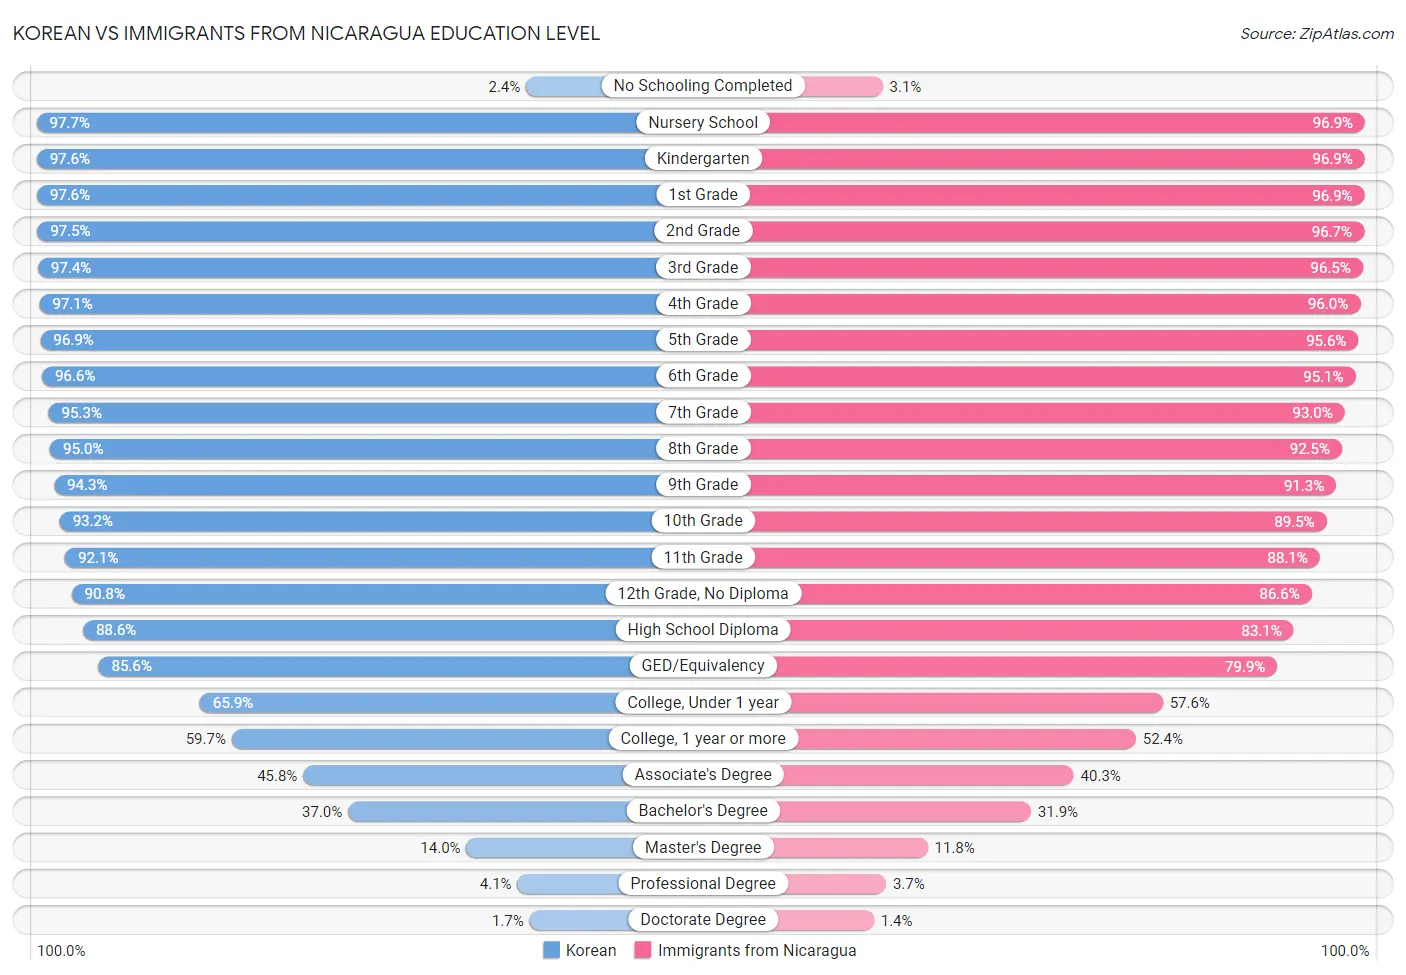 Korean vs Immigrants from Nicaragua Education Level